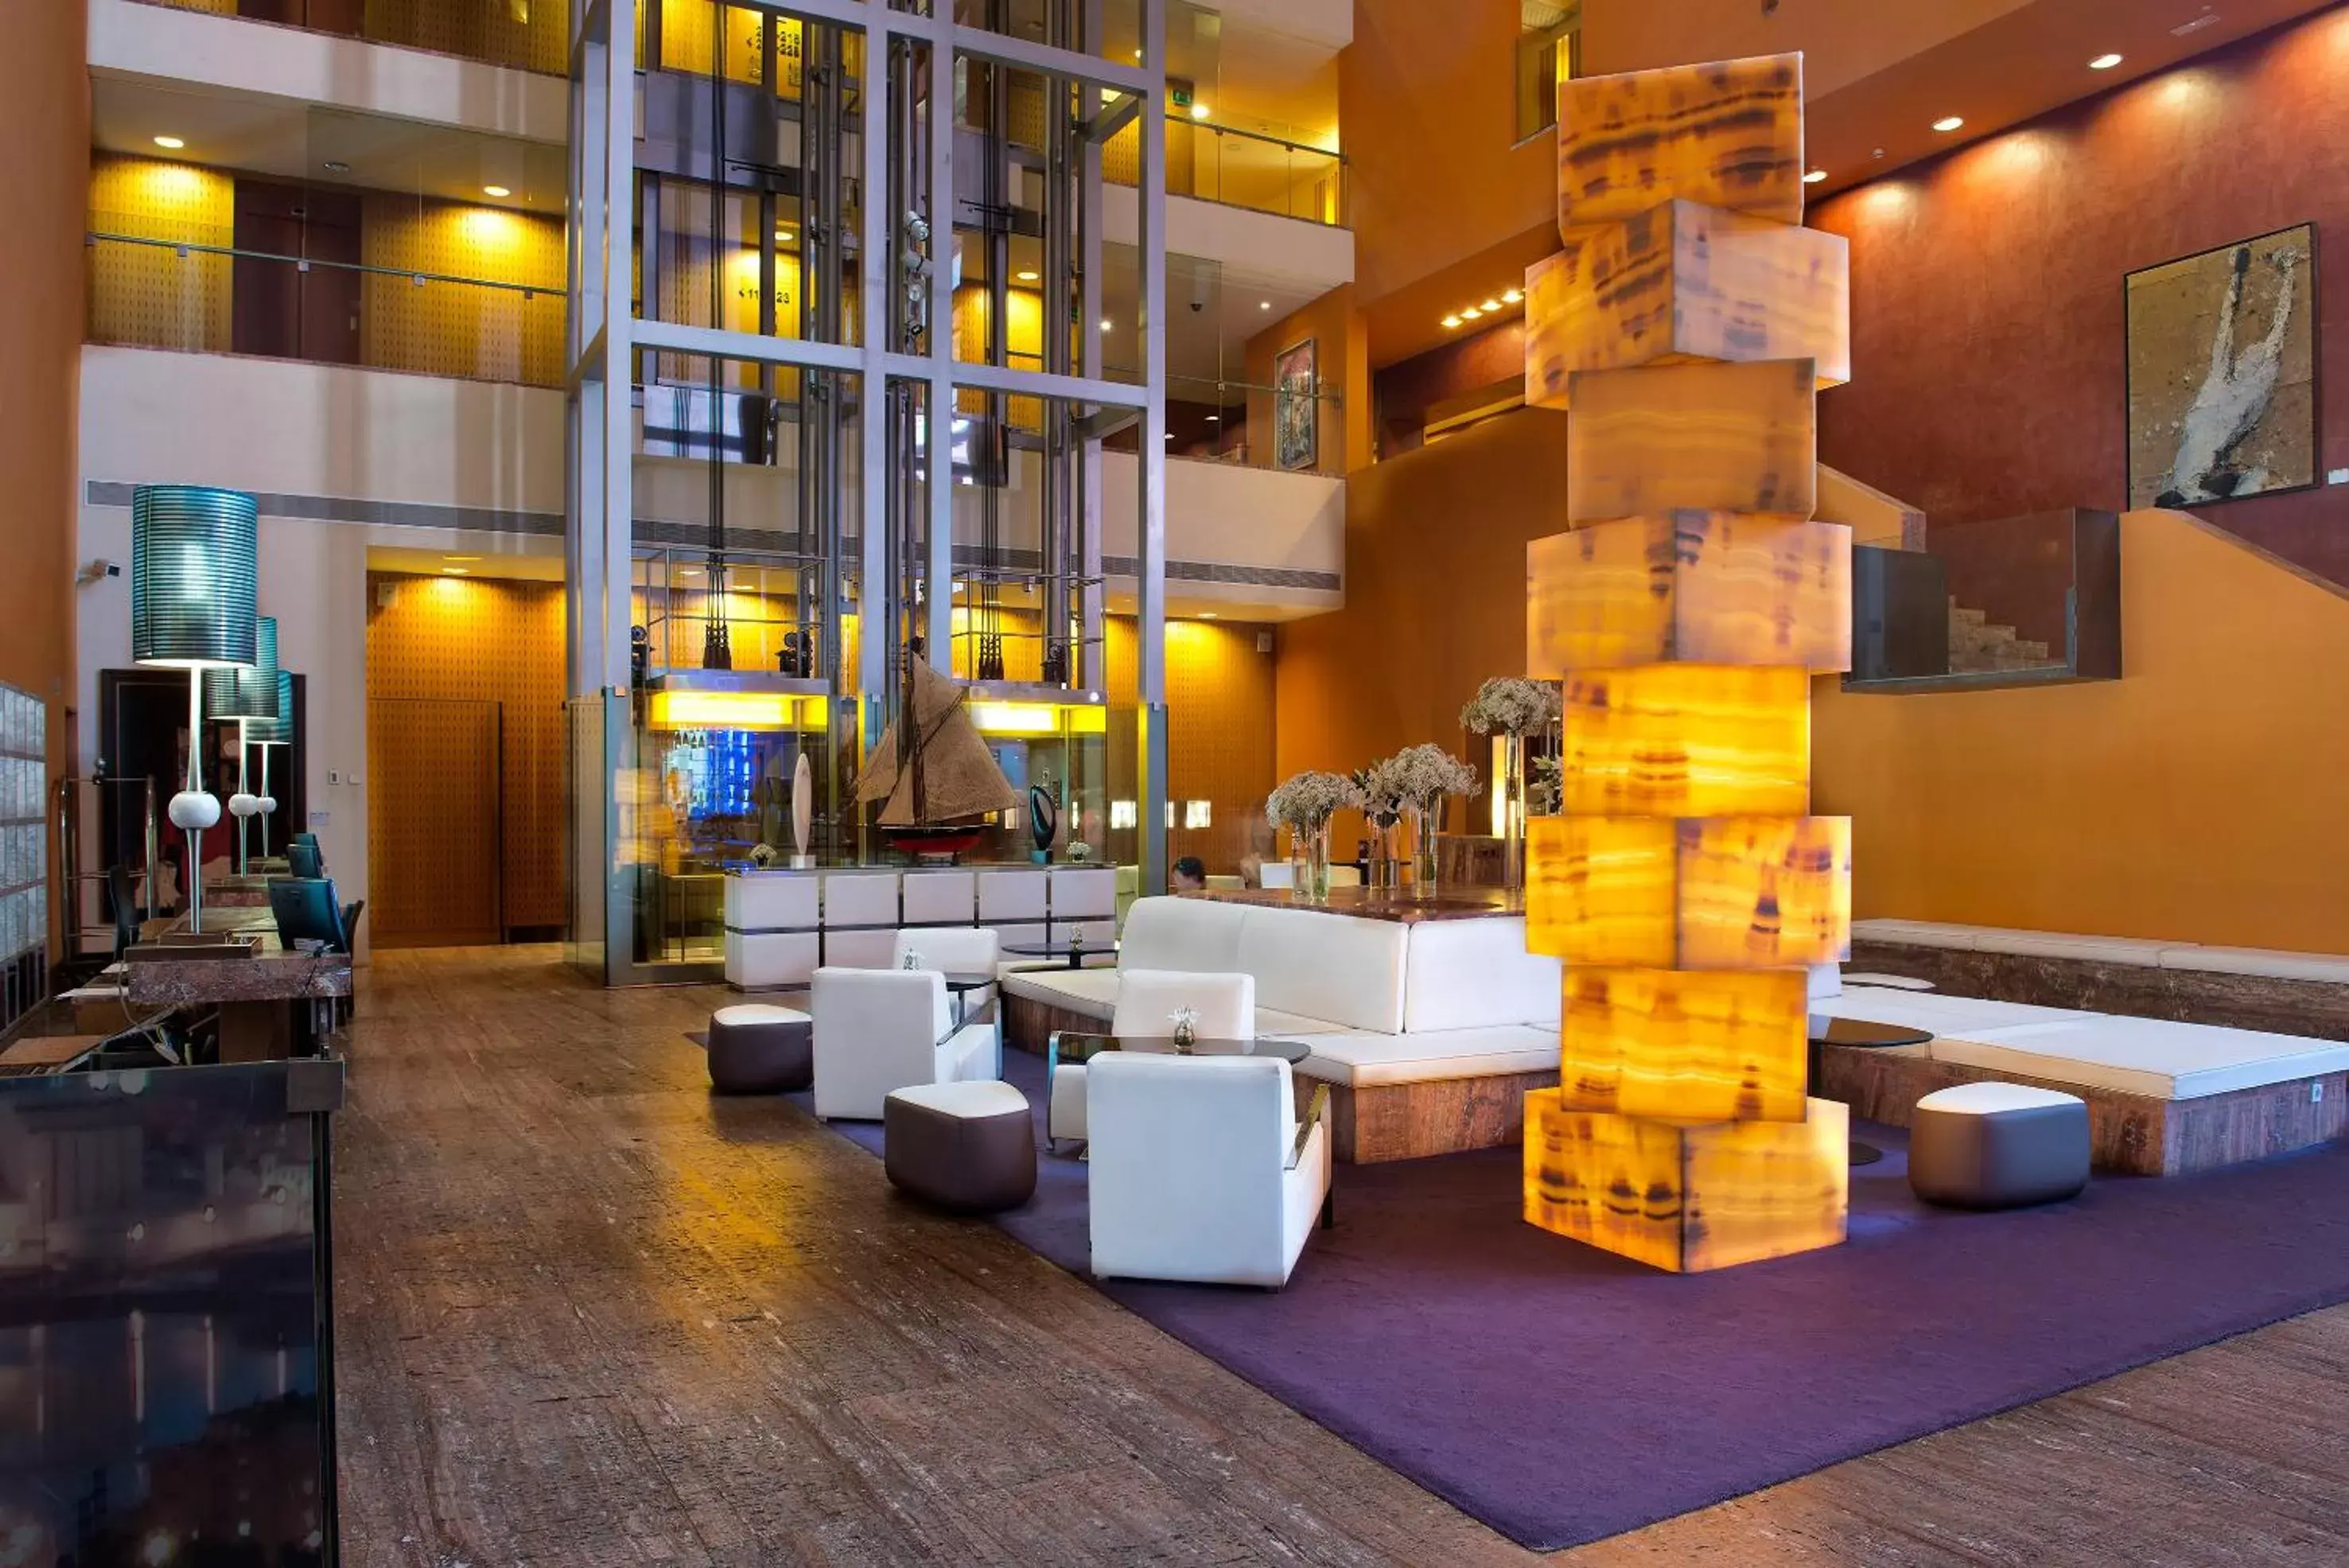 Lobby or reception in Hotel Melia Bilbao